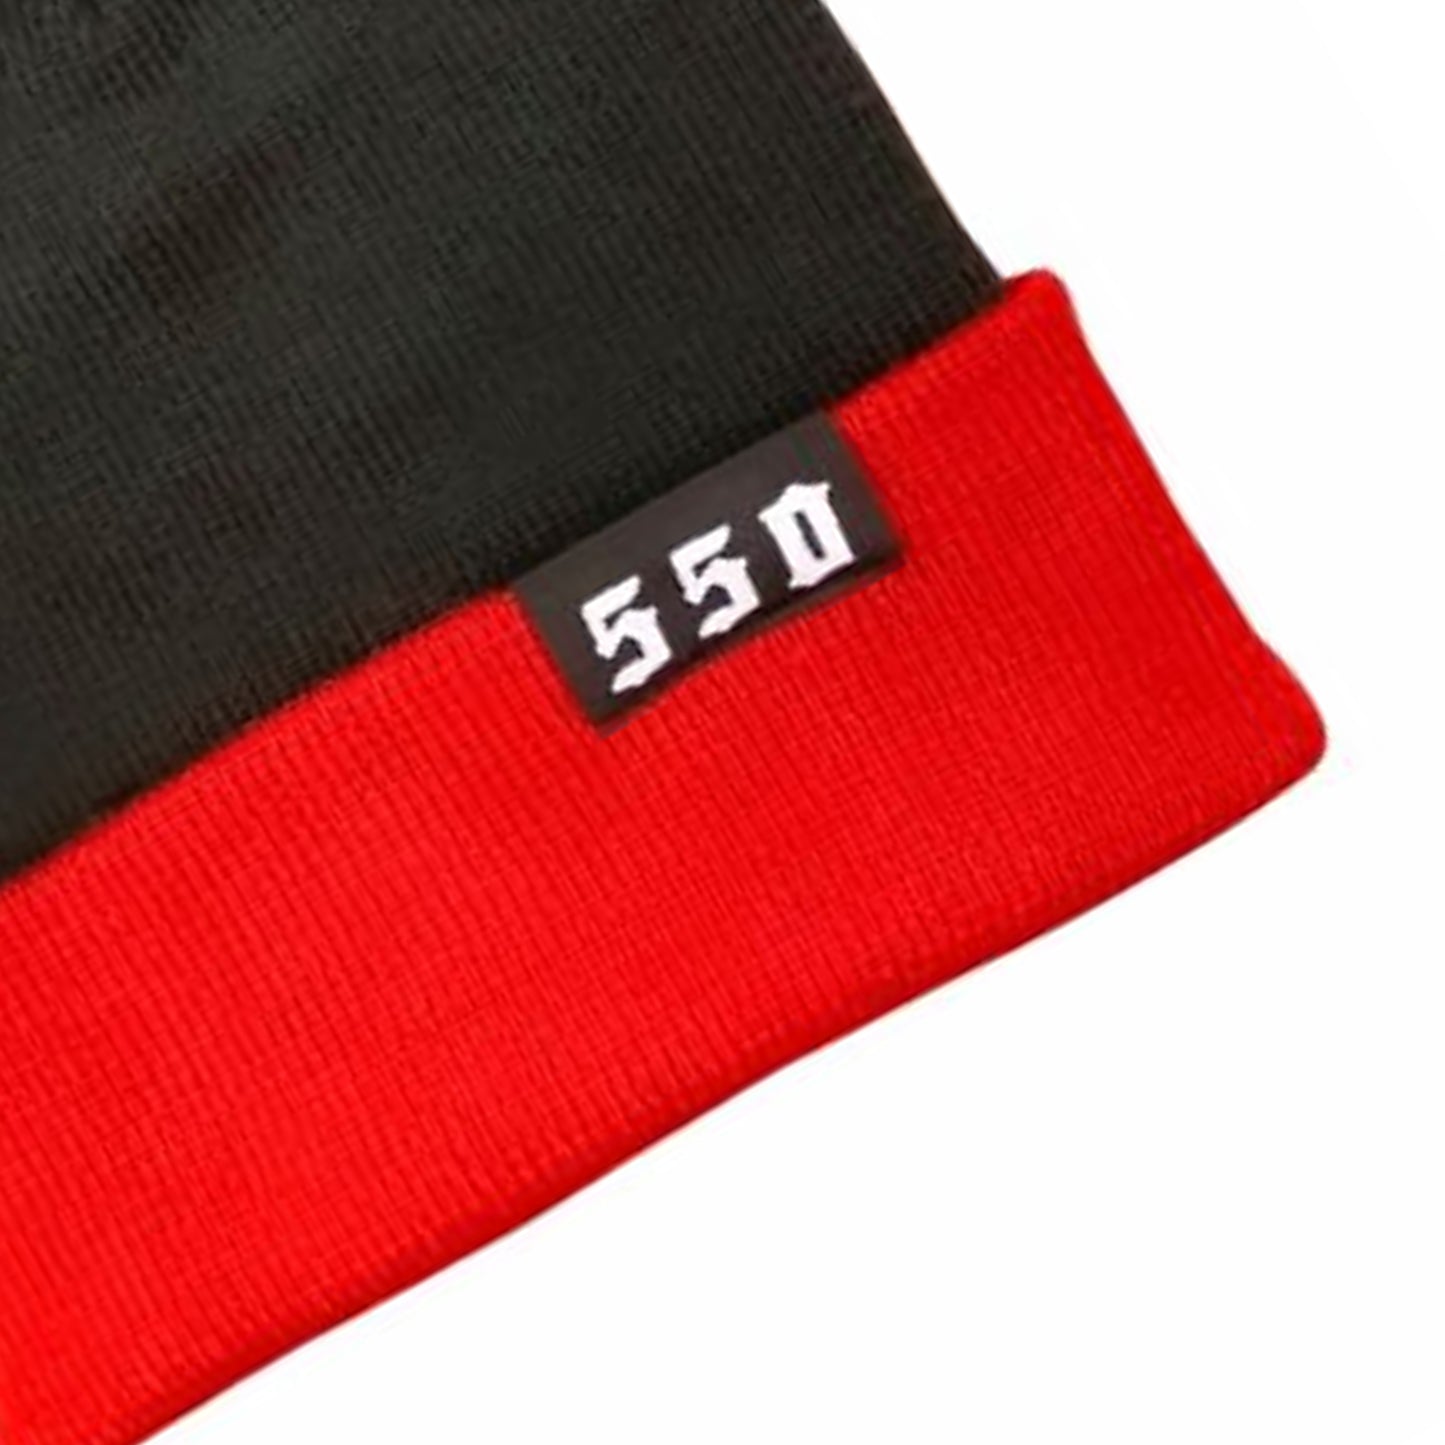 550 Beanie Red/Black